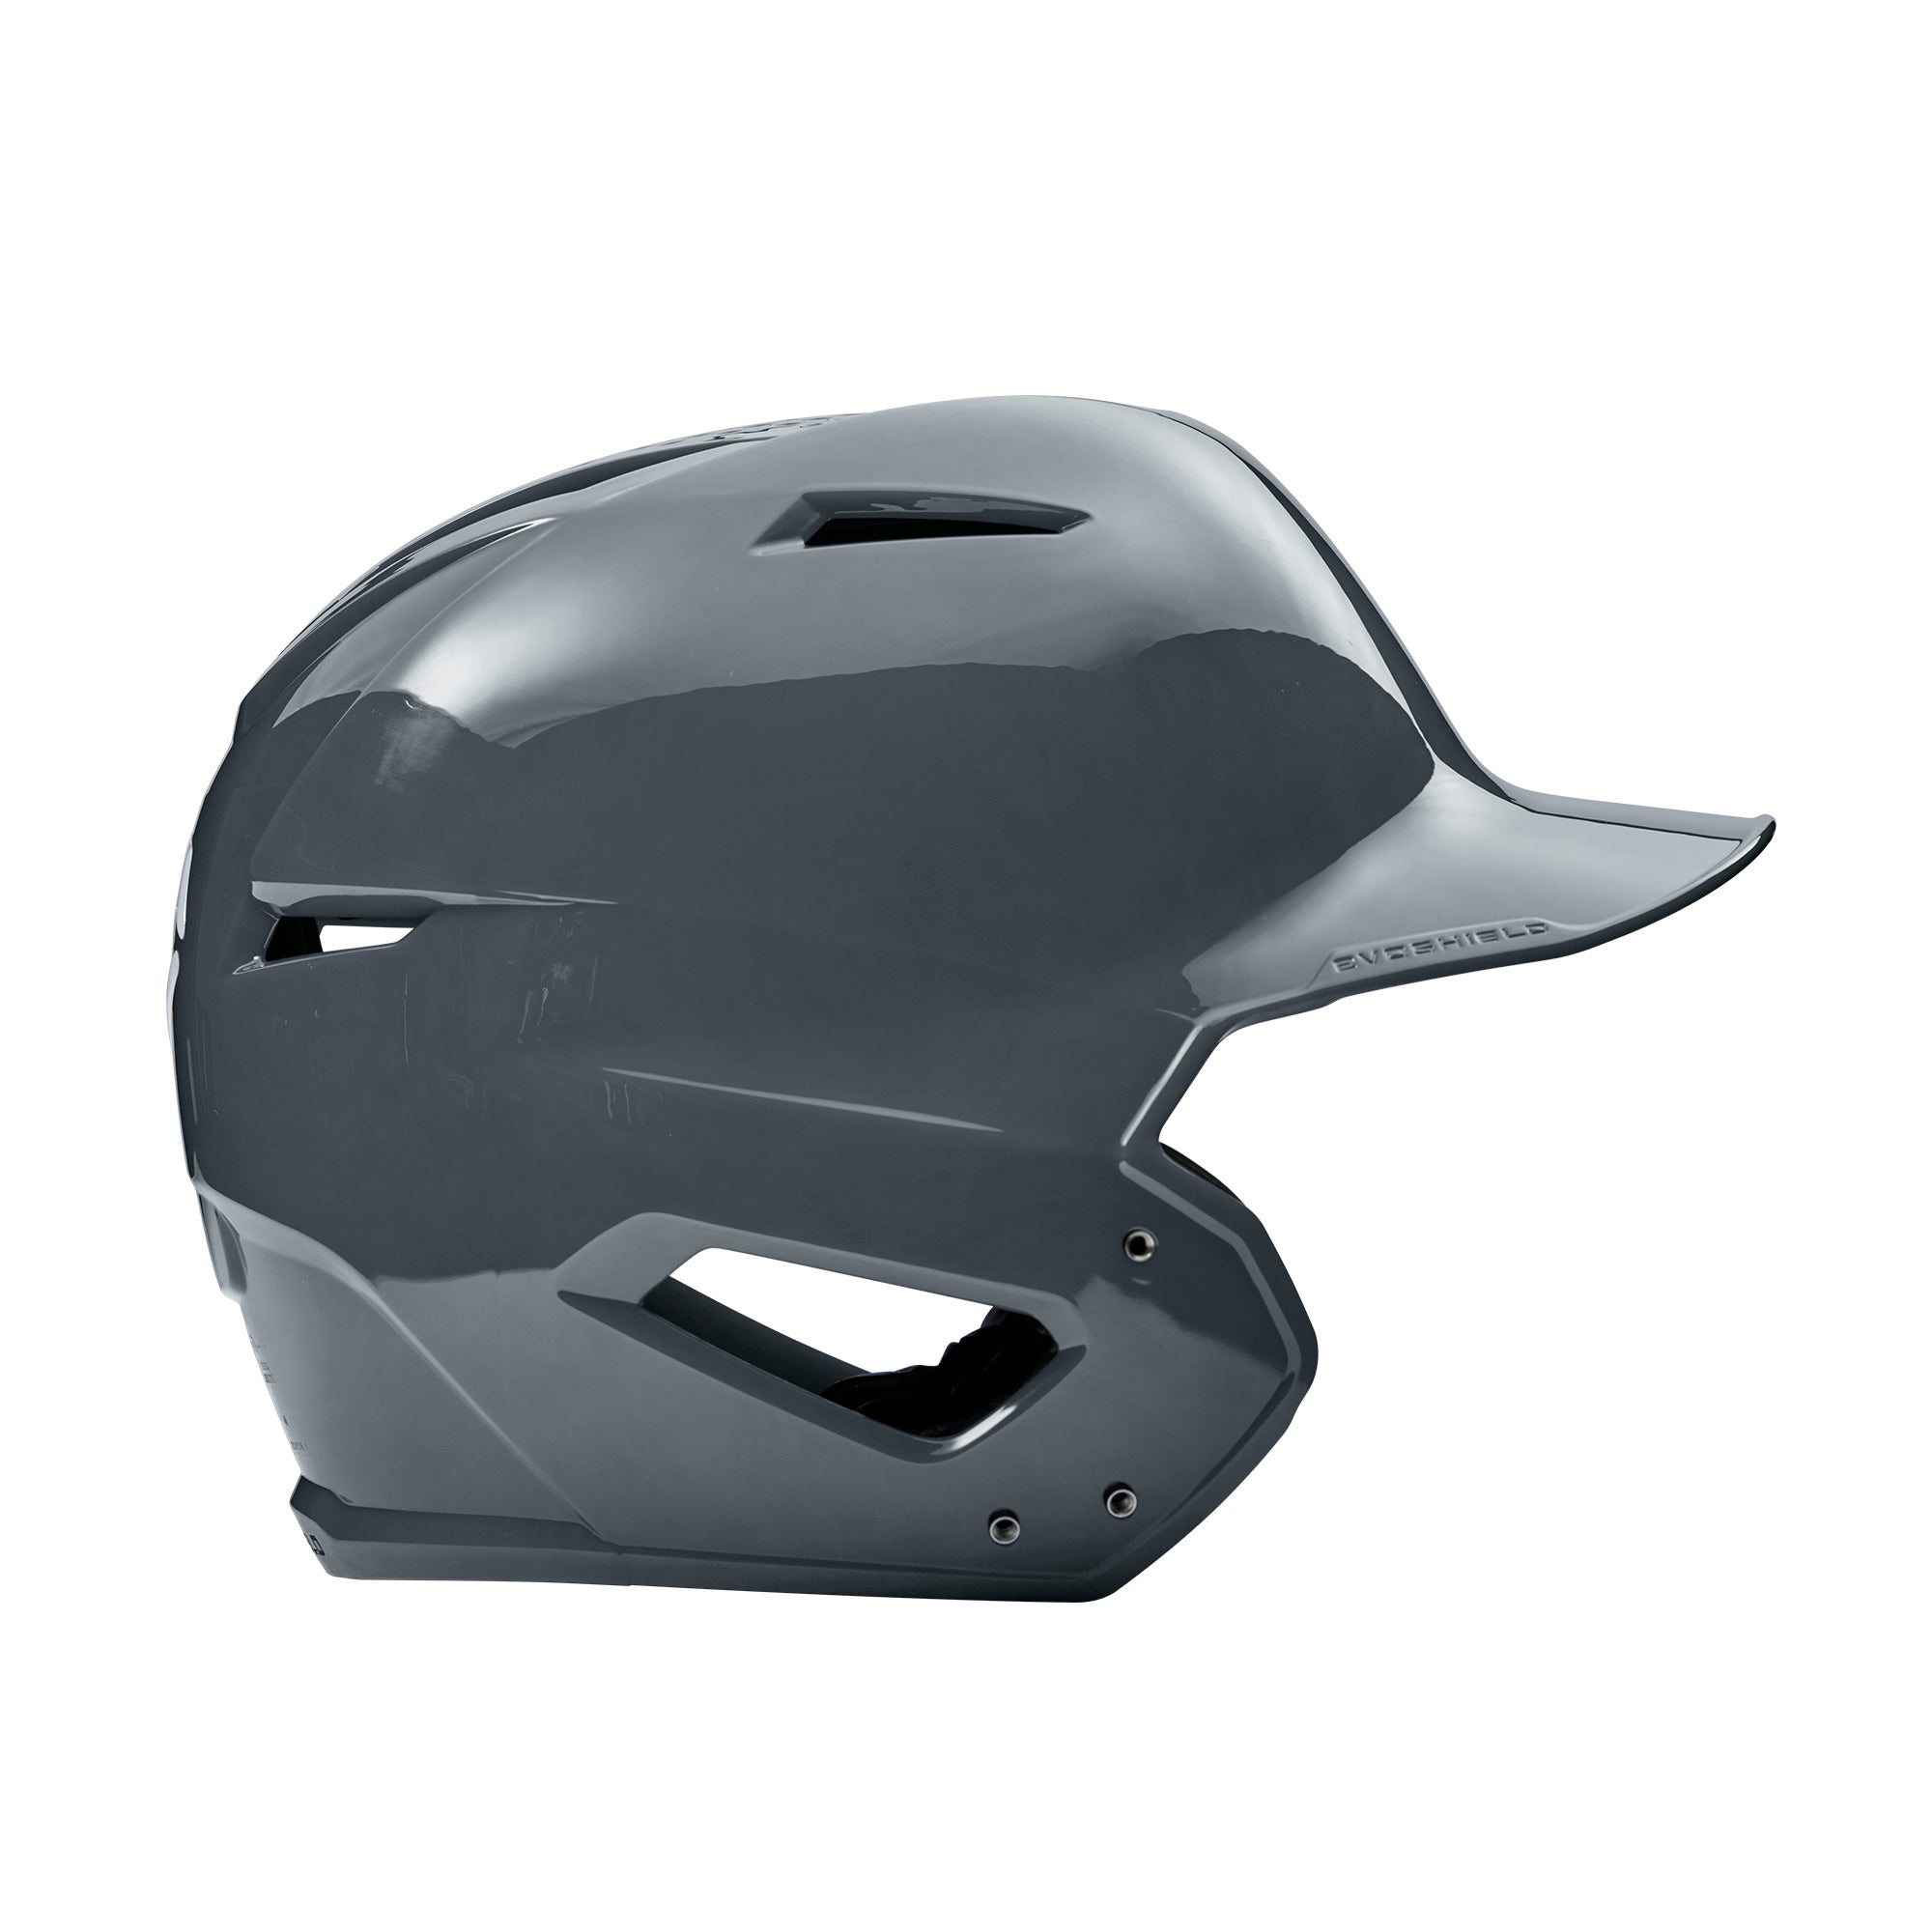 Evoshield Youth XVT Batting Helmet Glossy Charcoal